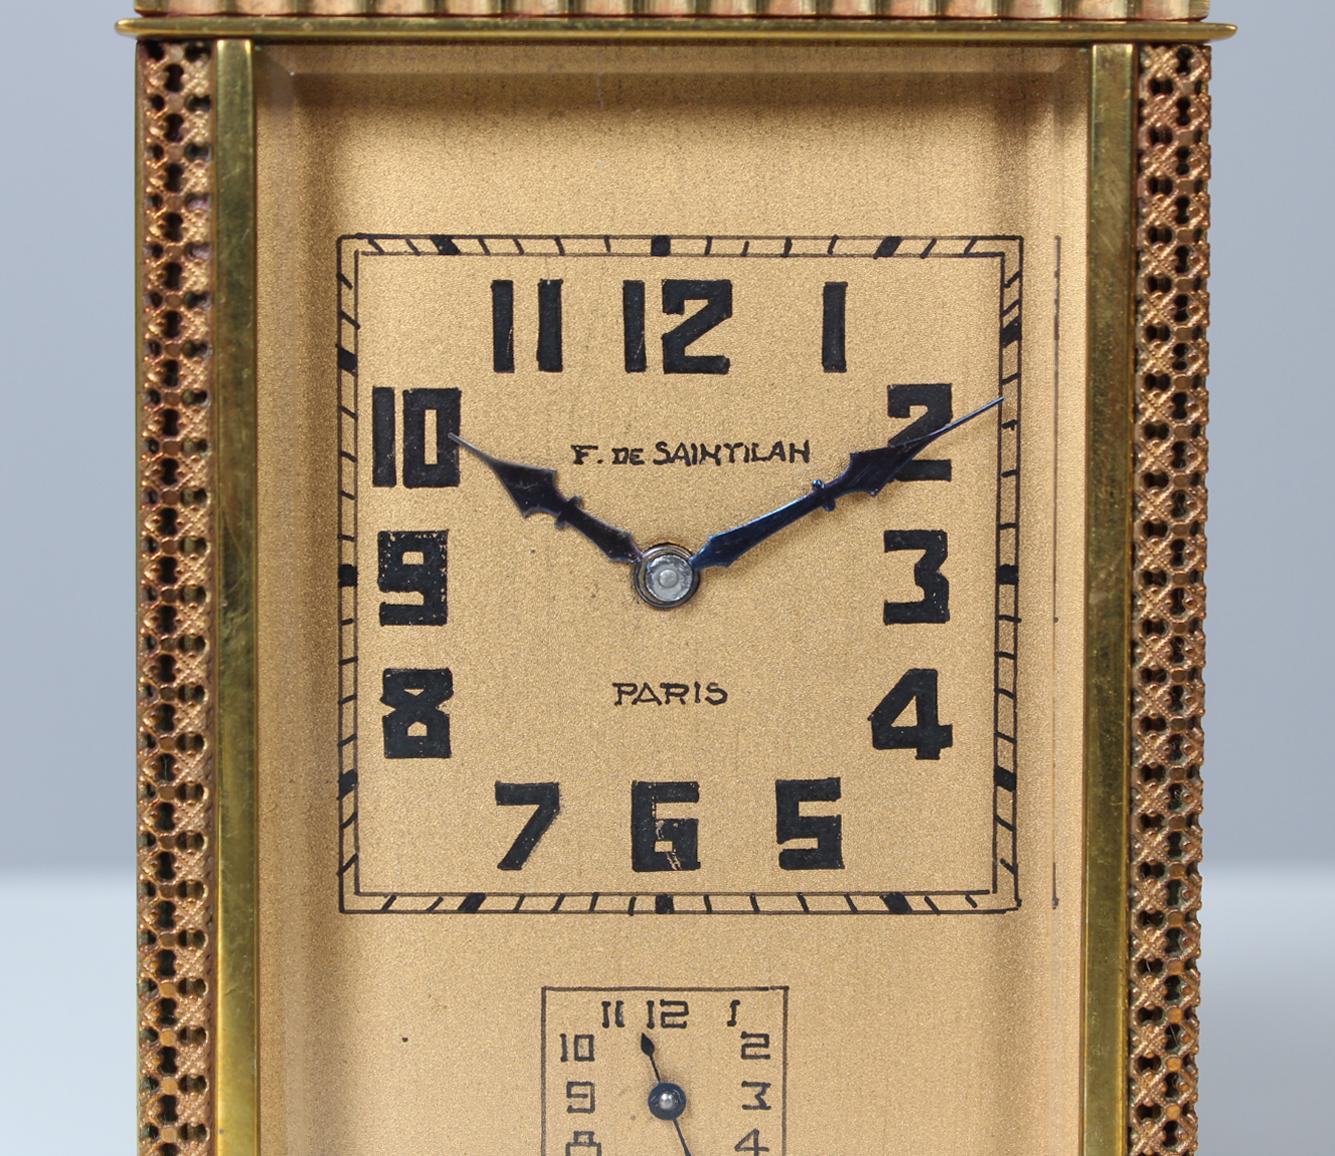 French Art Deco Travel Clock with Alarmfunction, Paris, 1920s-1930s